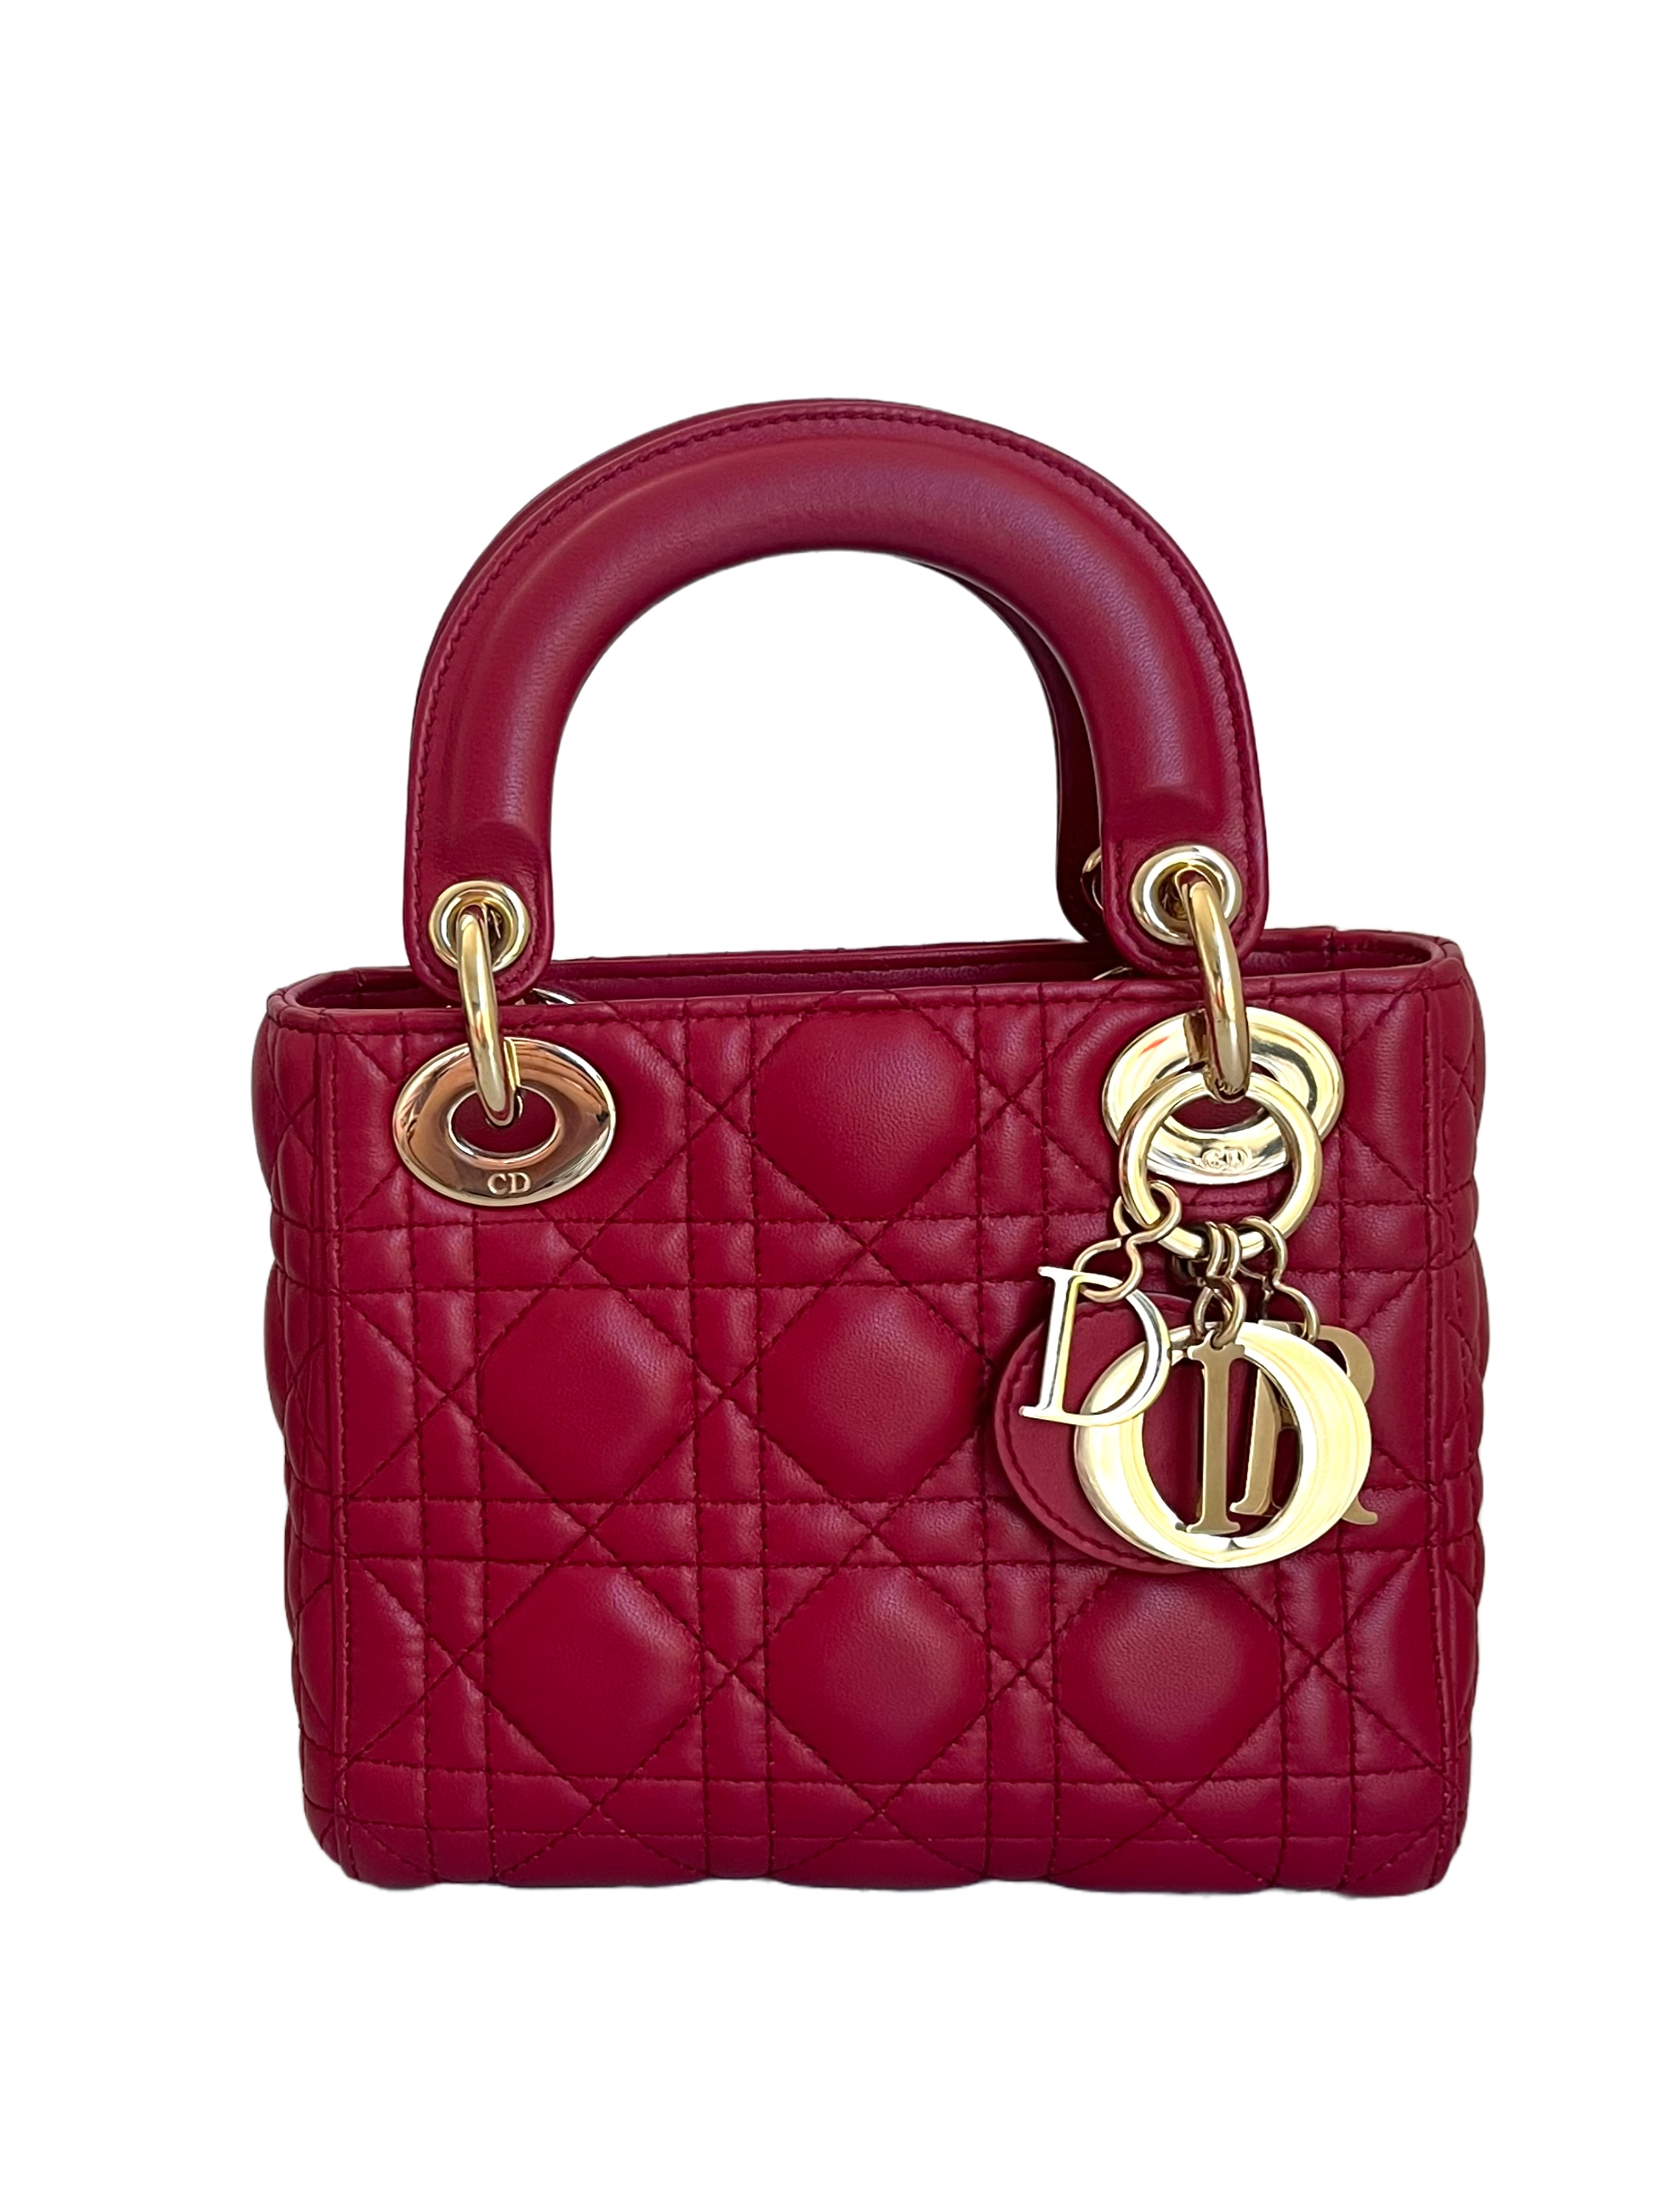 Mini Lady Dior Bag Red  Nice Bag